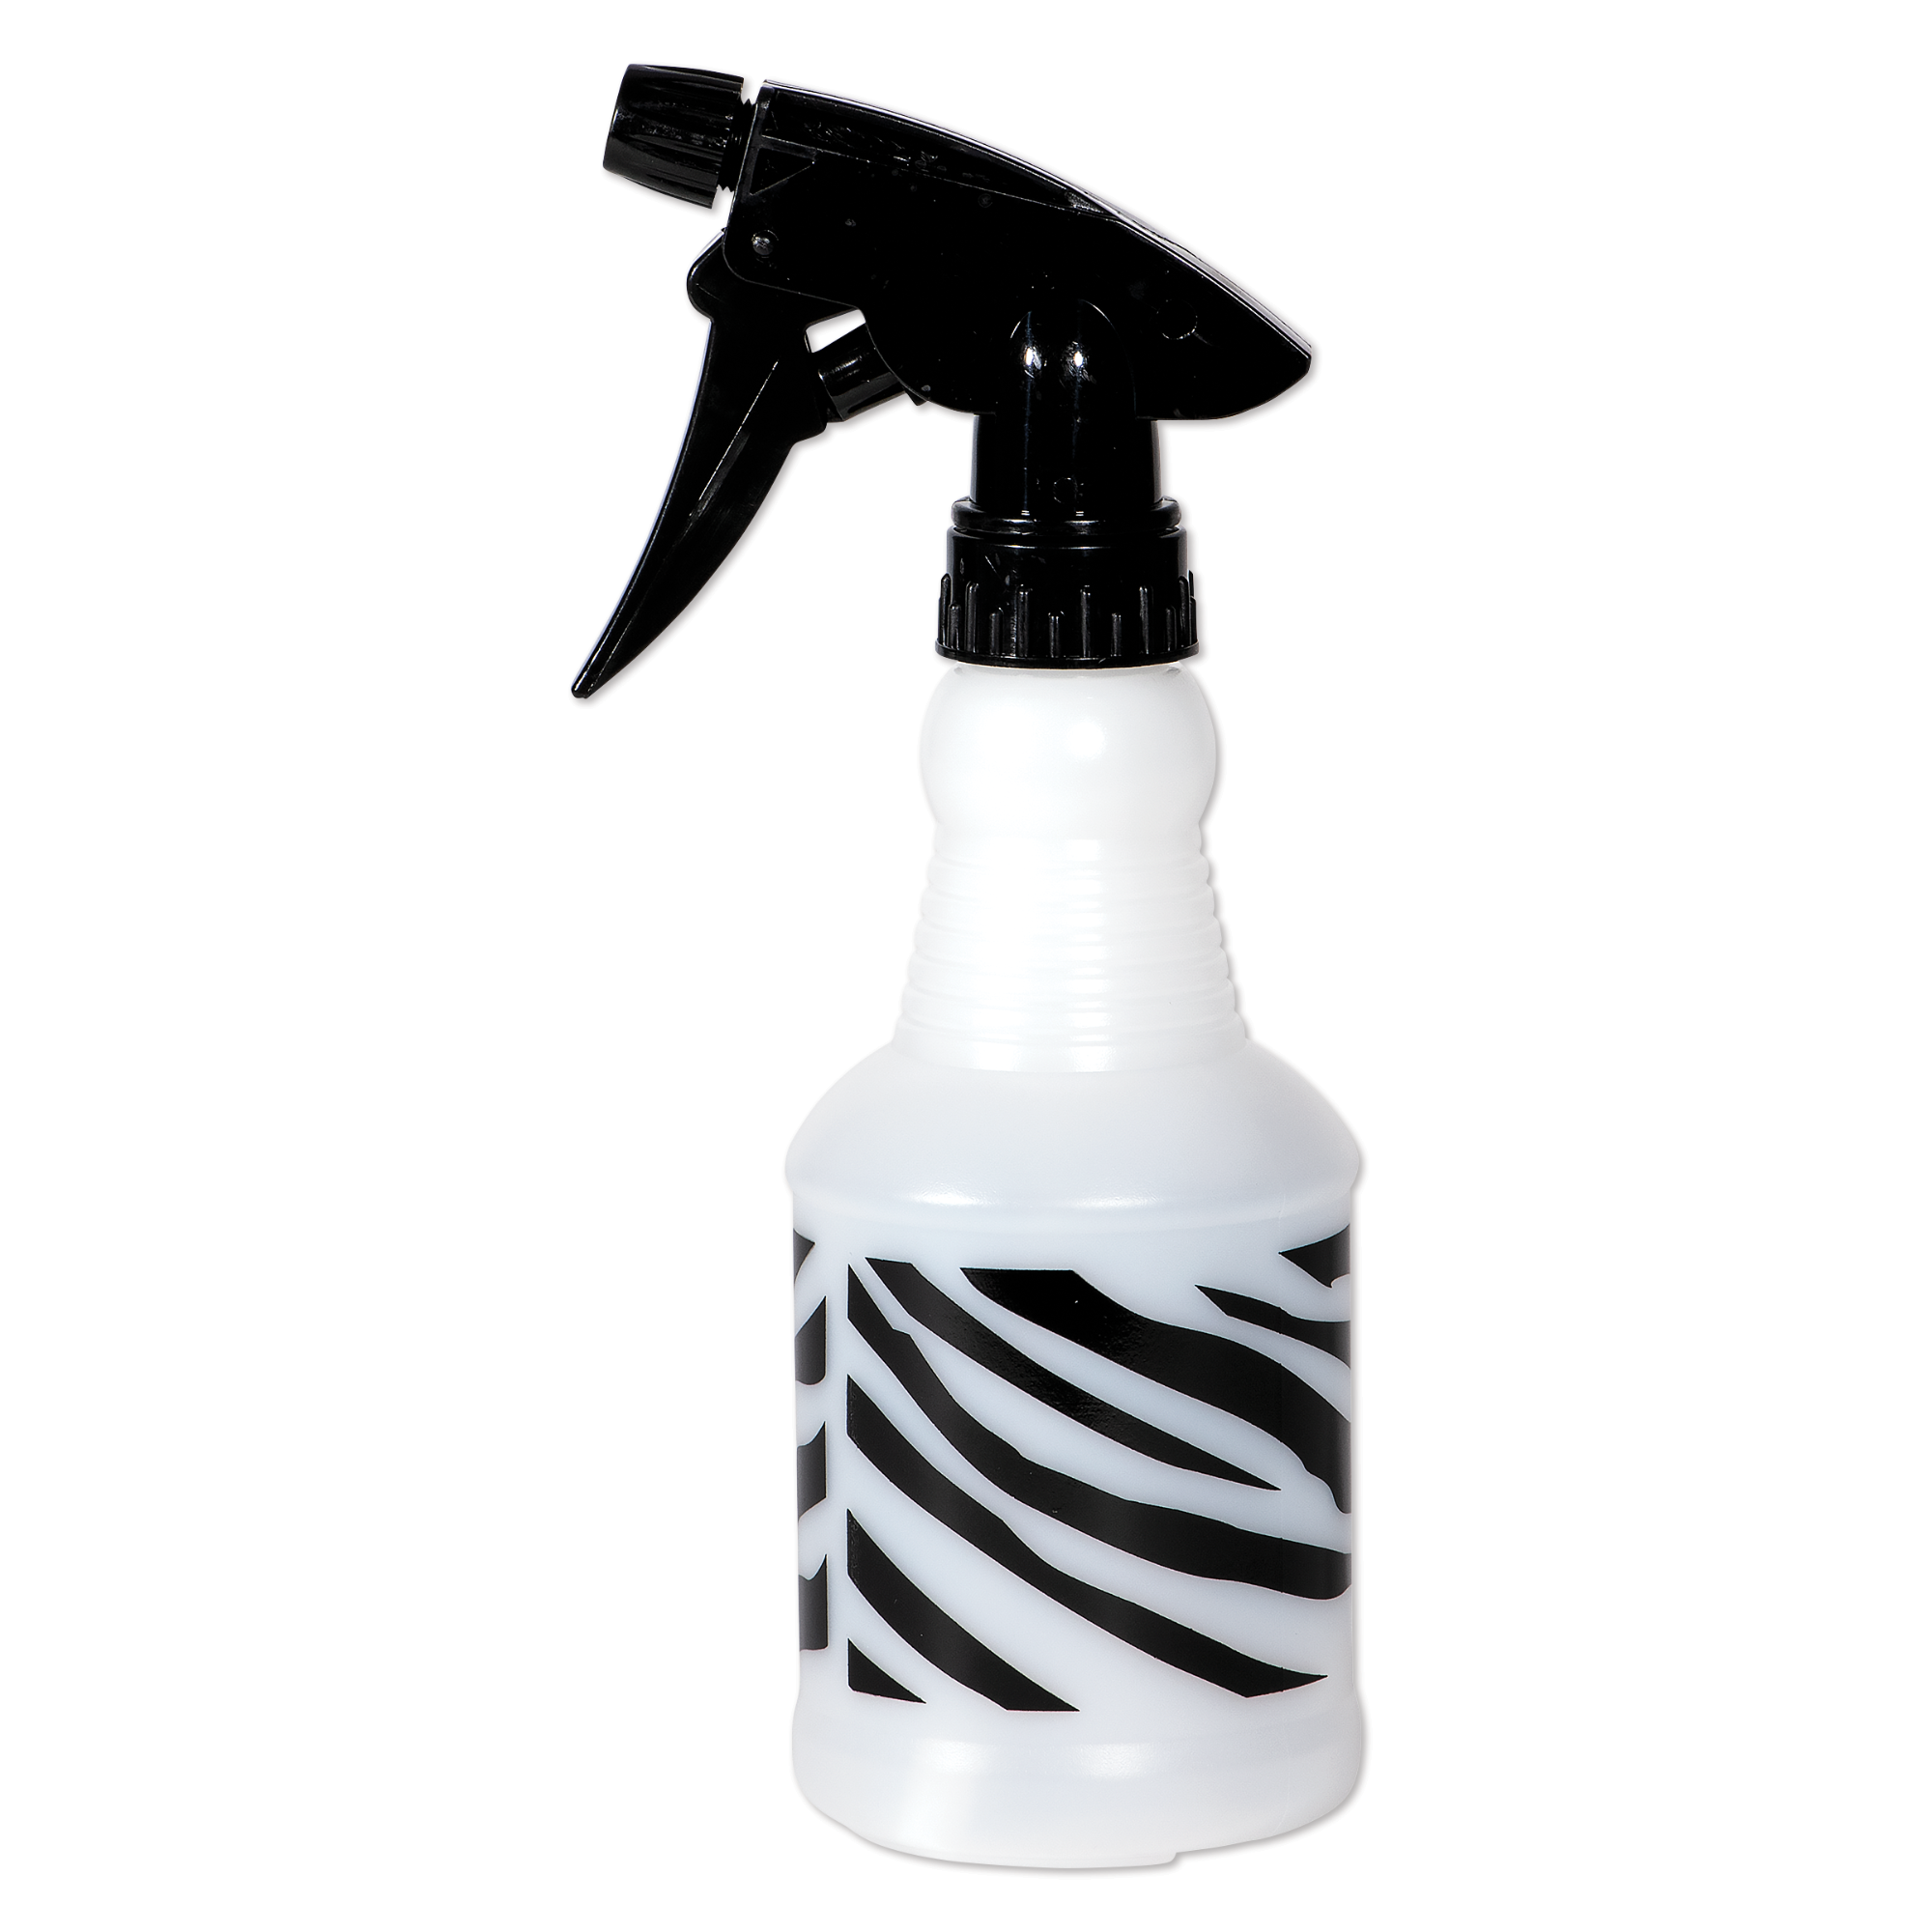 Spray Bottle with Zebra Design, 12 oz.